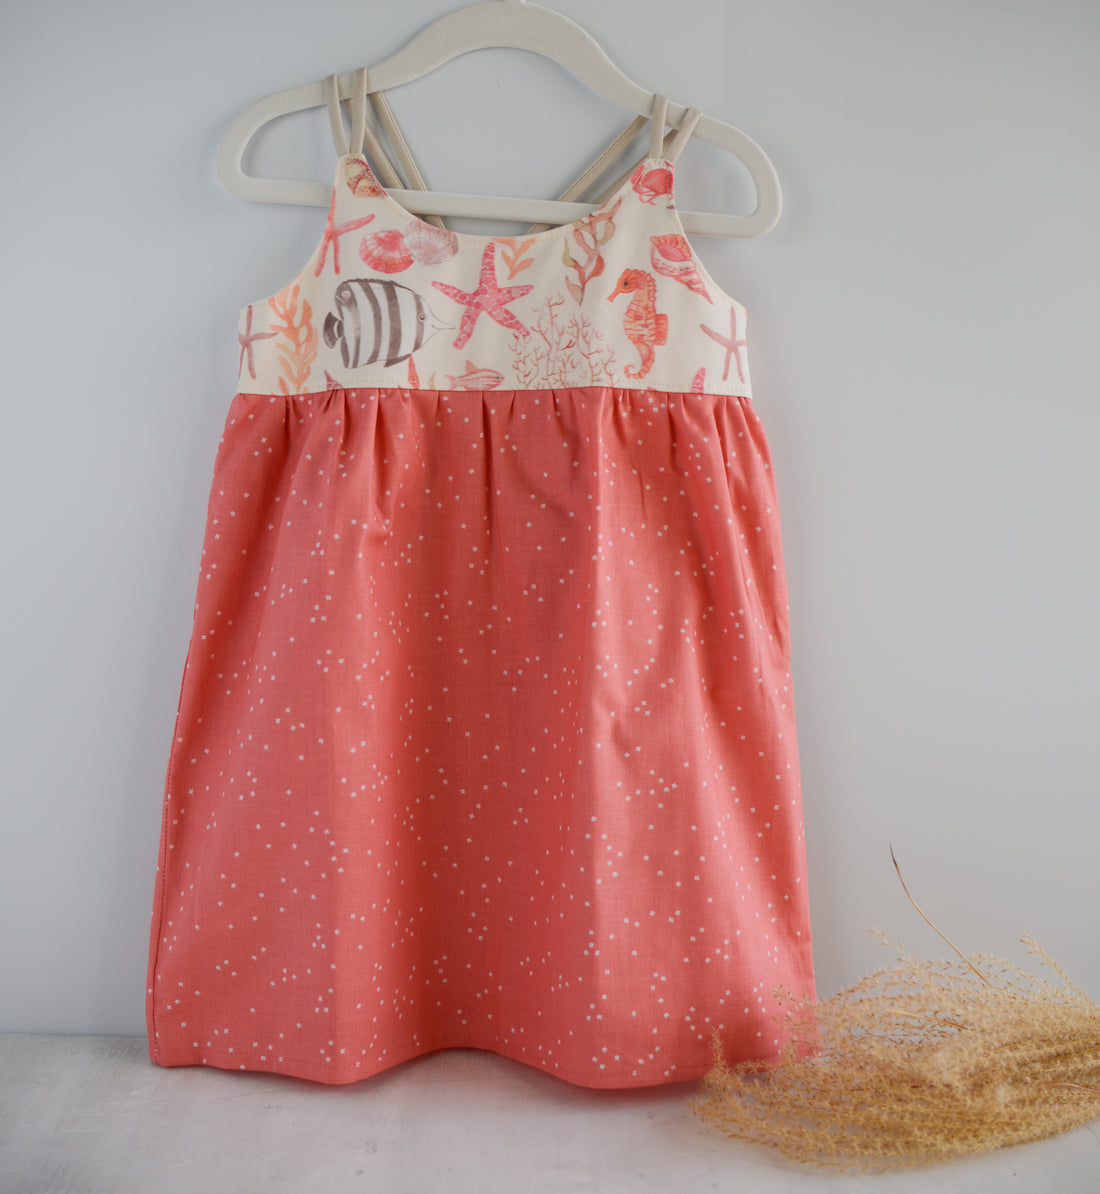 Ocean Theme Girls Dress - Toddler Dress - Baby Girl Dress - Made in Hawaii